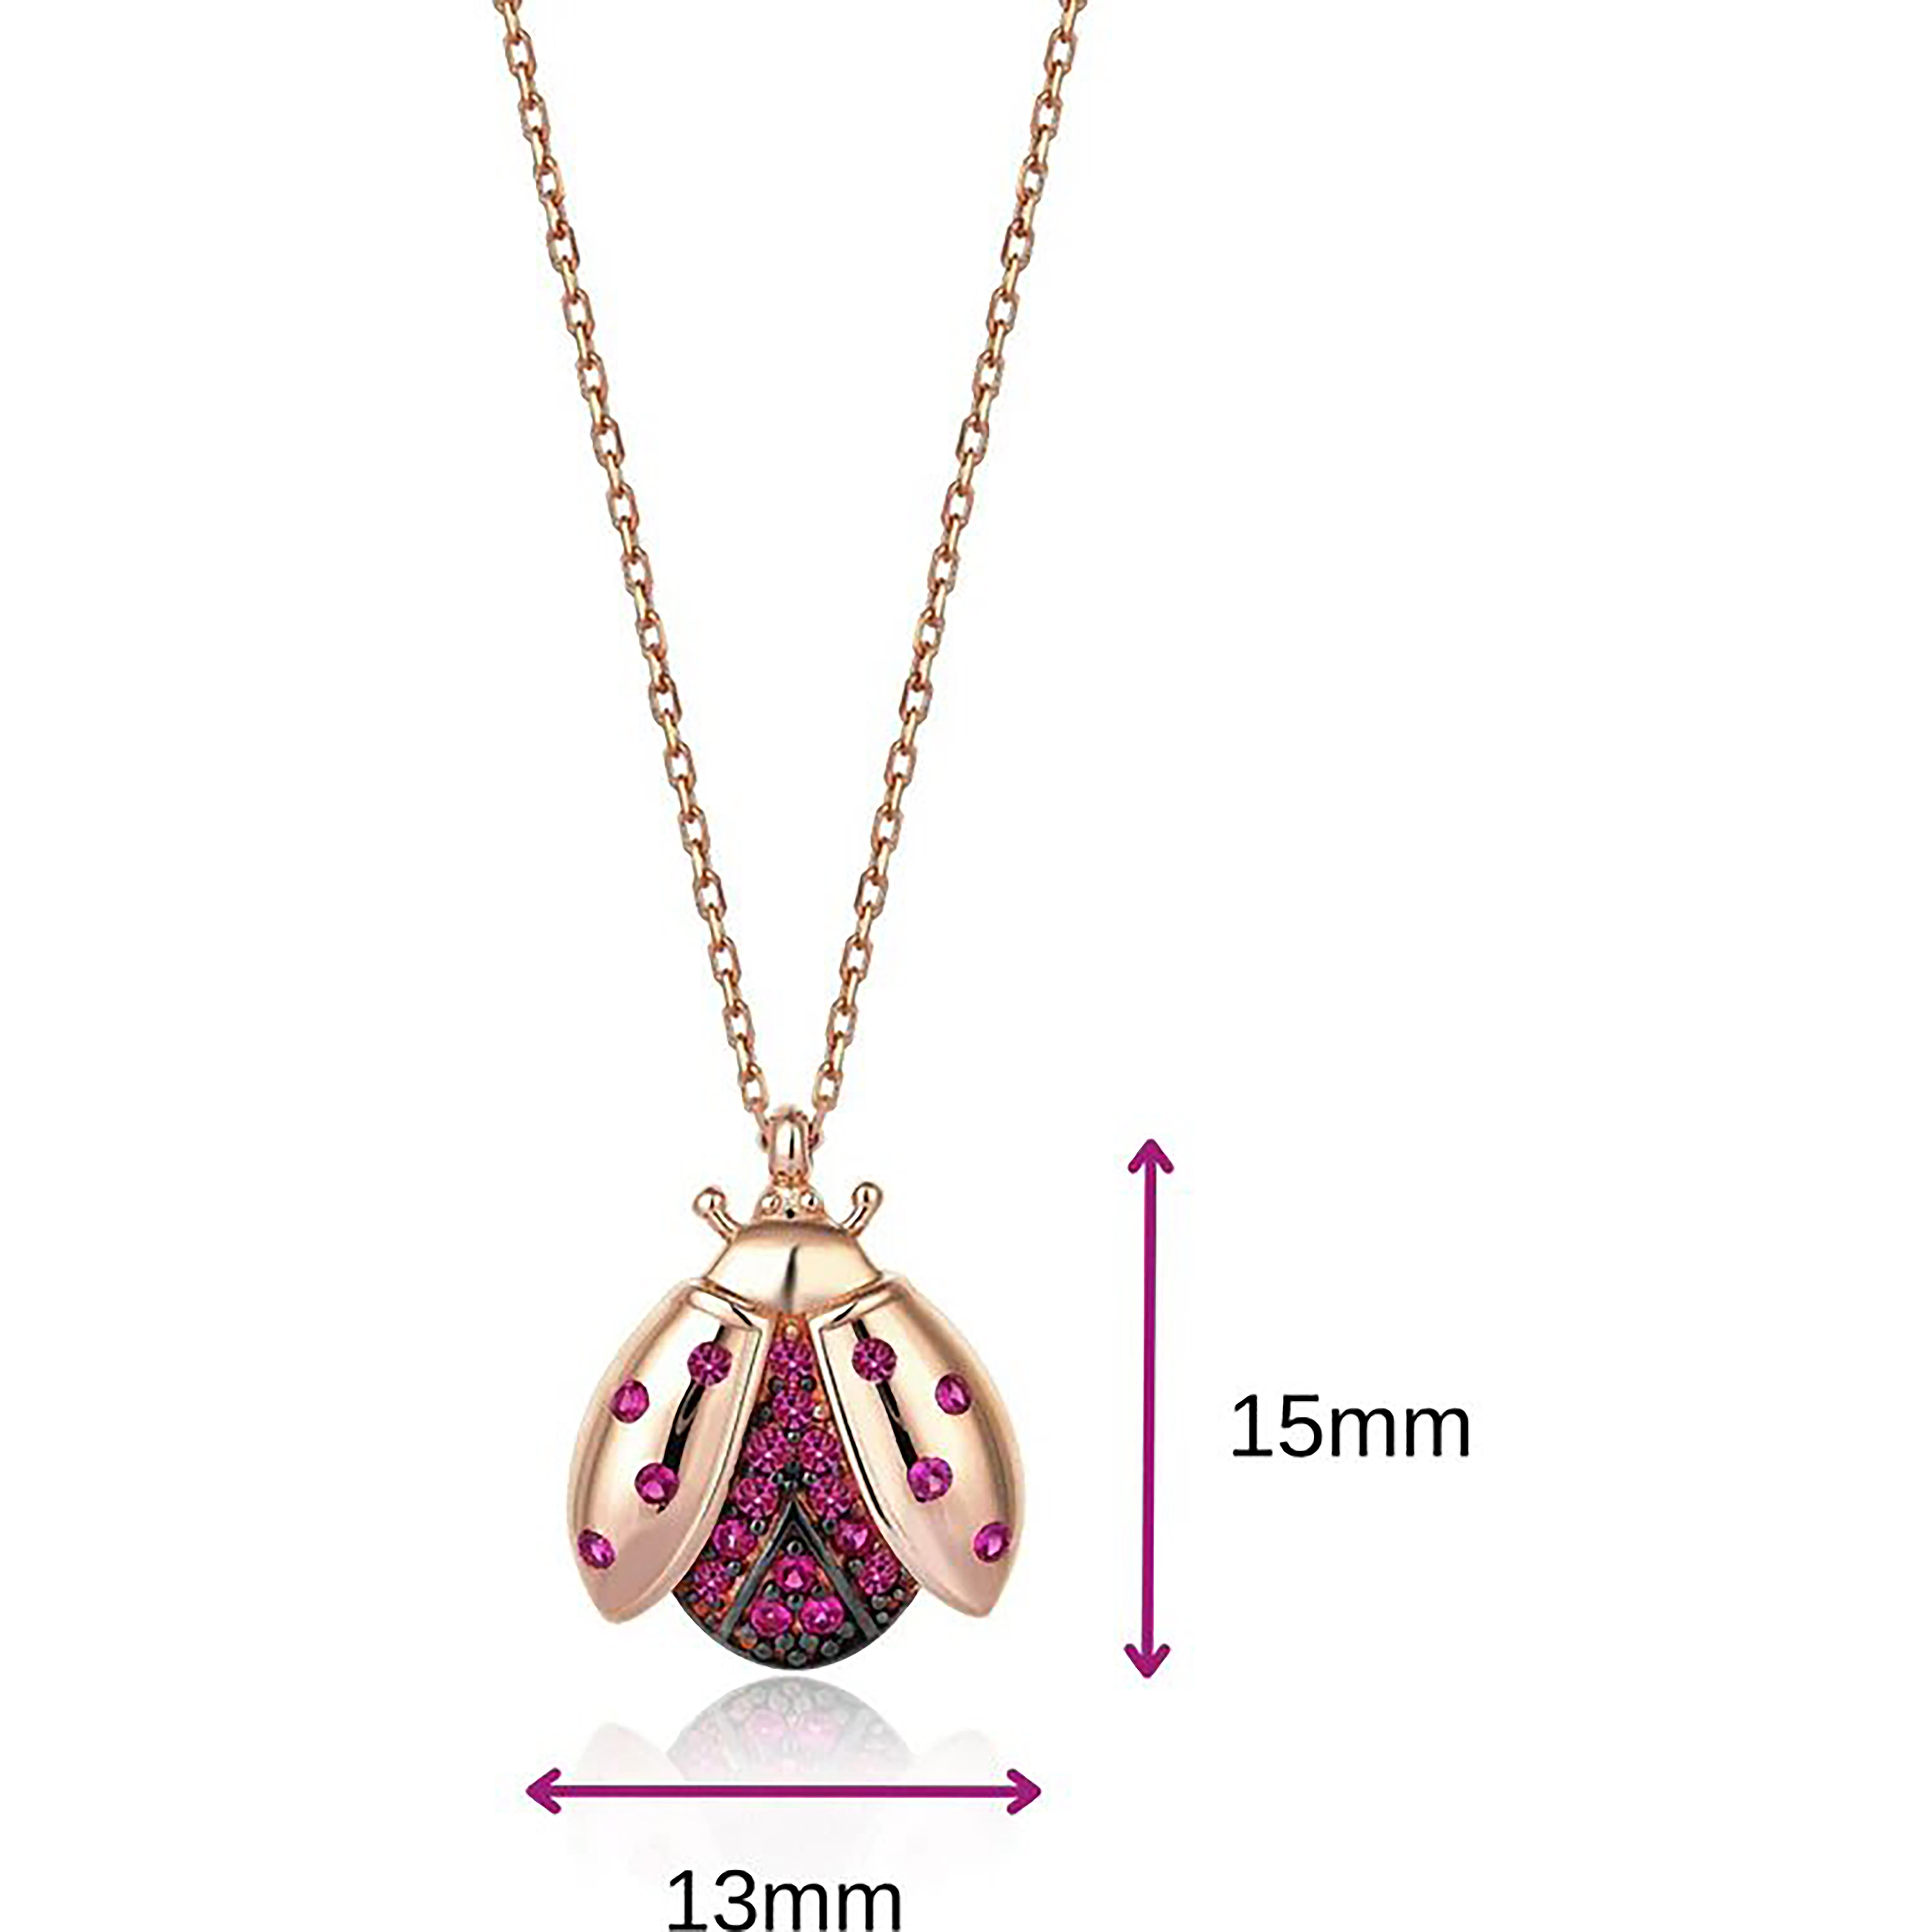 Modern 14k Gold Ladybug Necklace. 